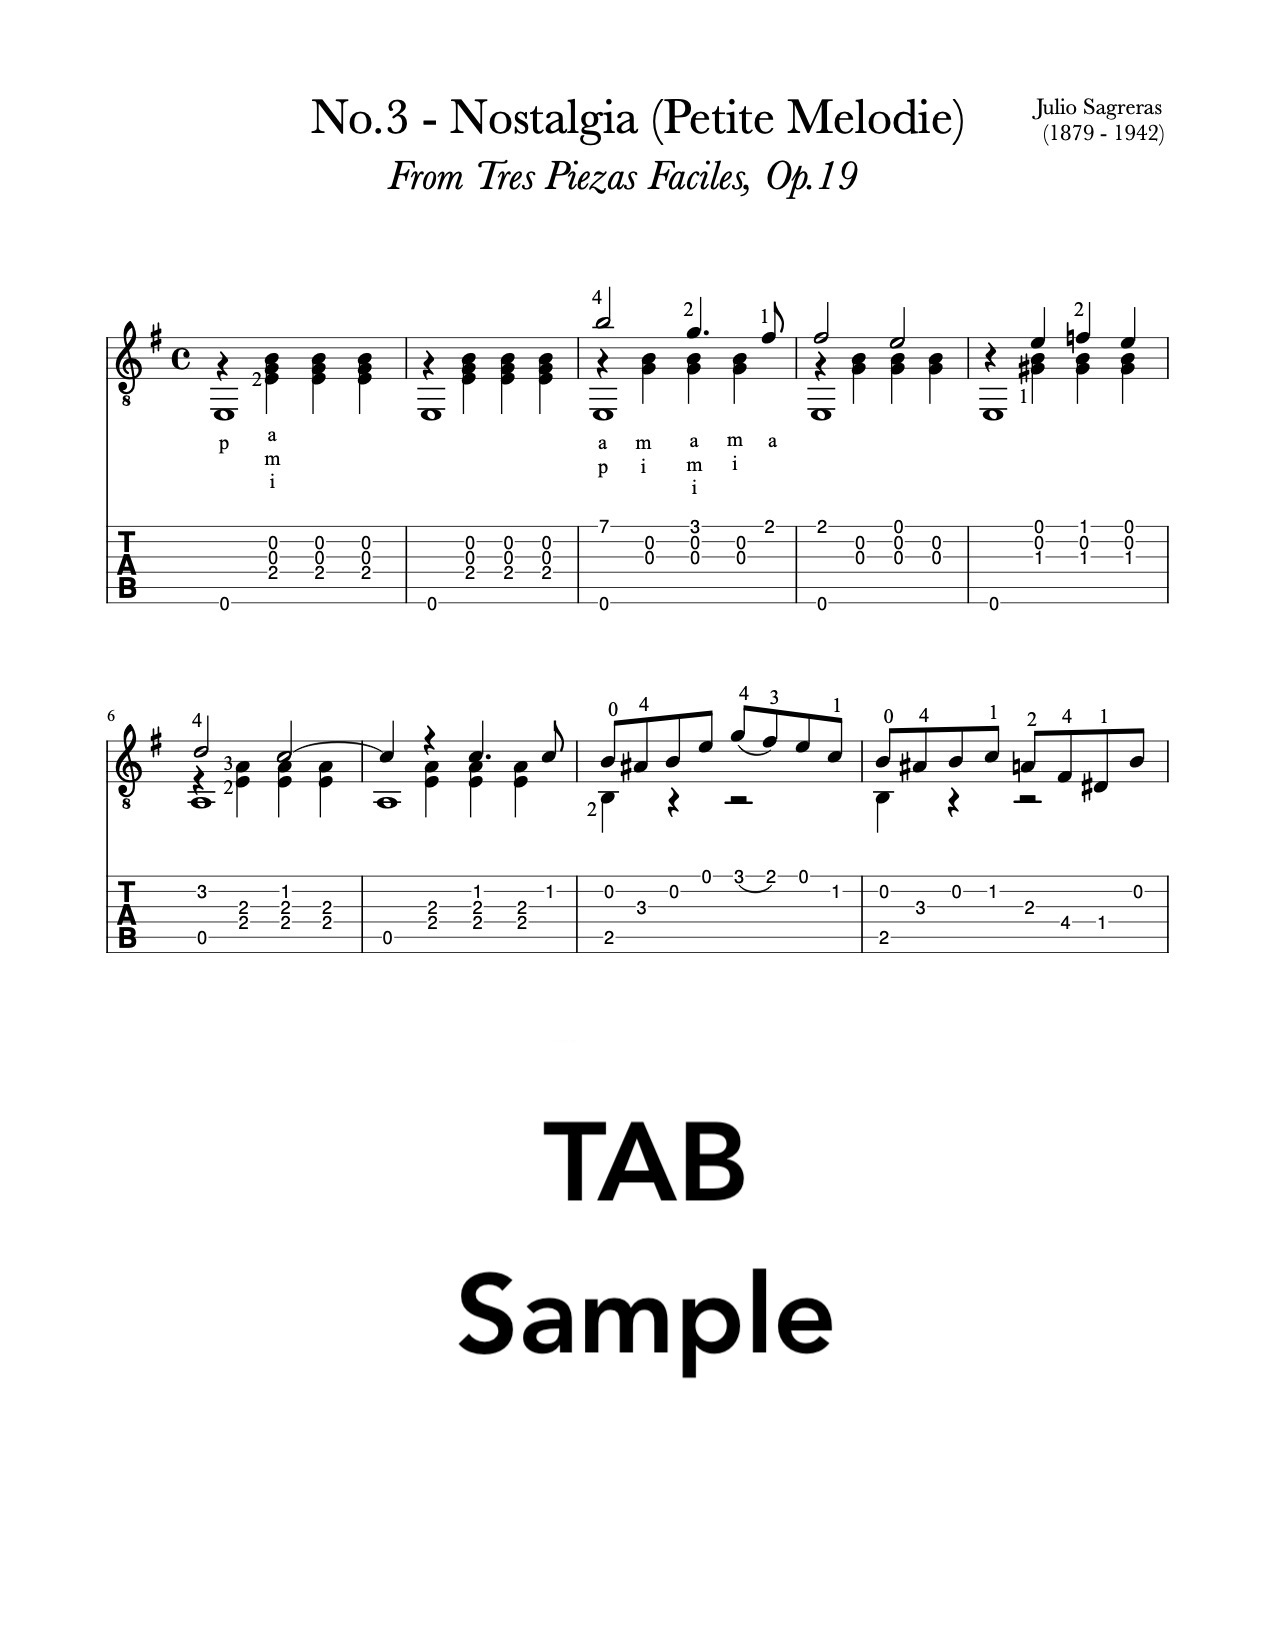 Nostalgia, No.3, Op.19 by Sagreras (Tab Sample)